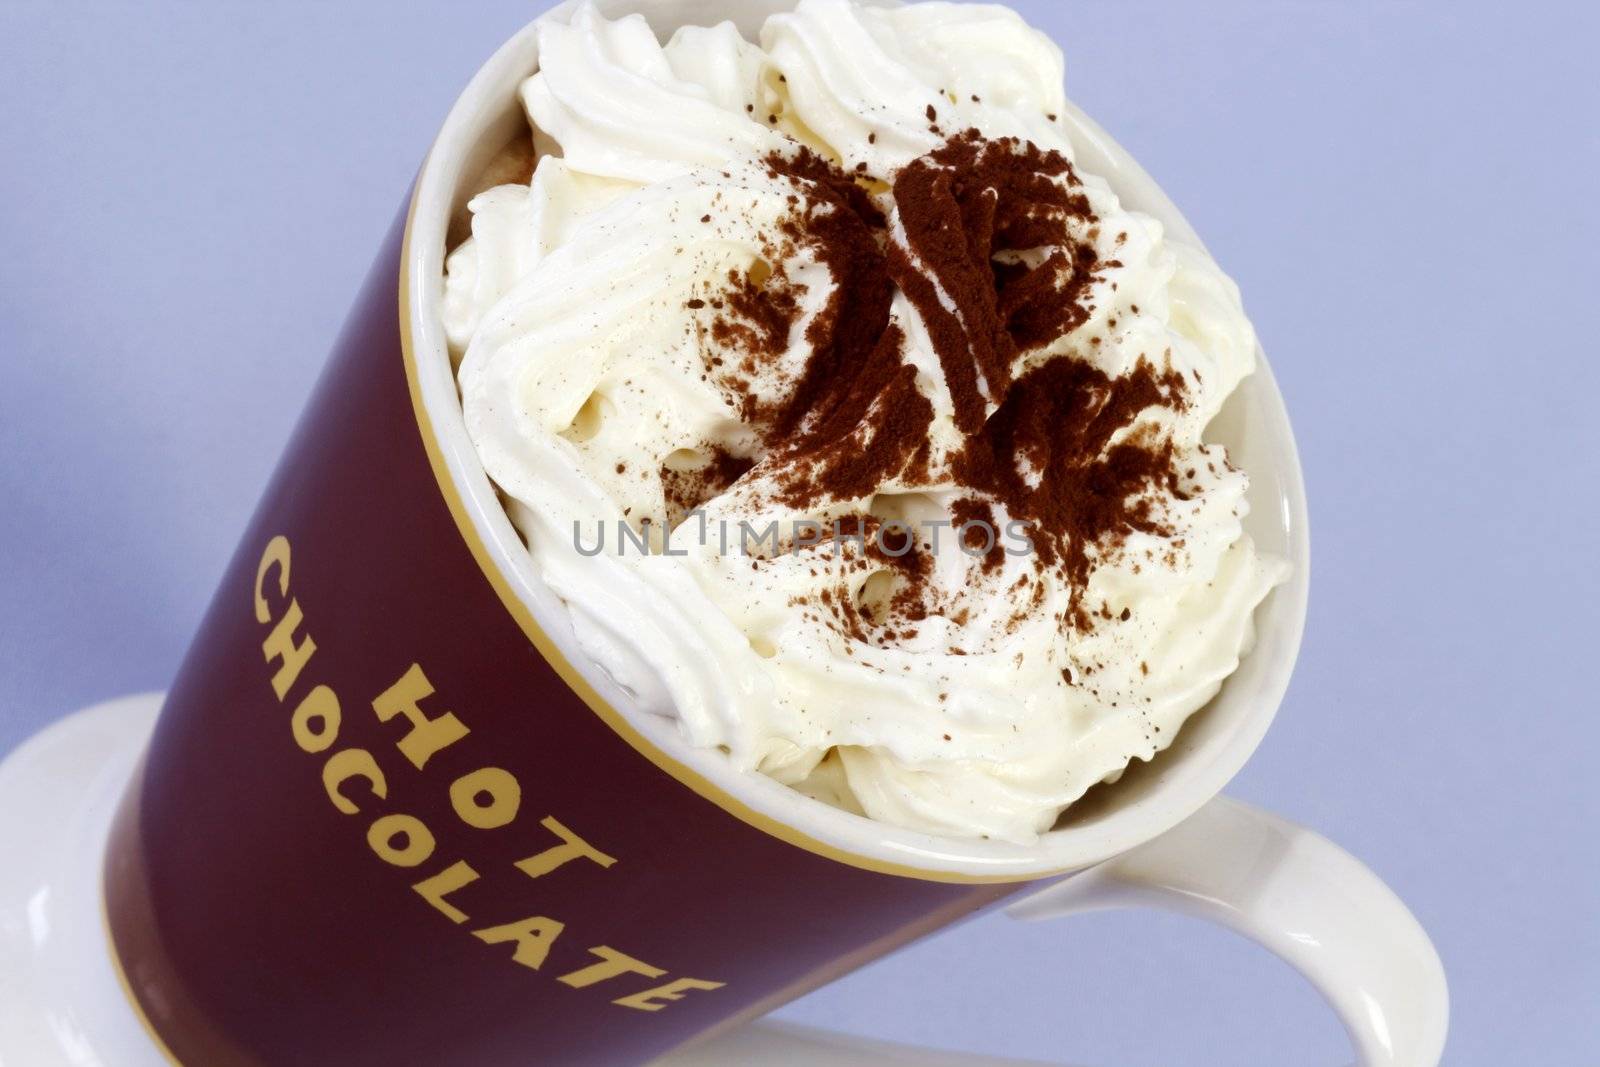 Hot Chocolate by Teamarbeit